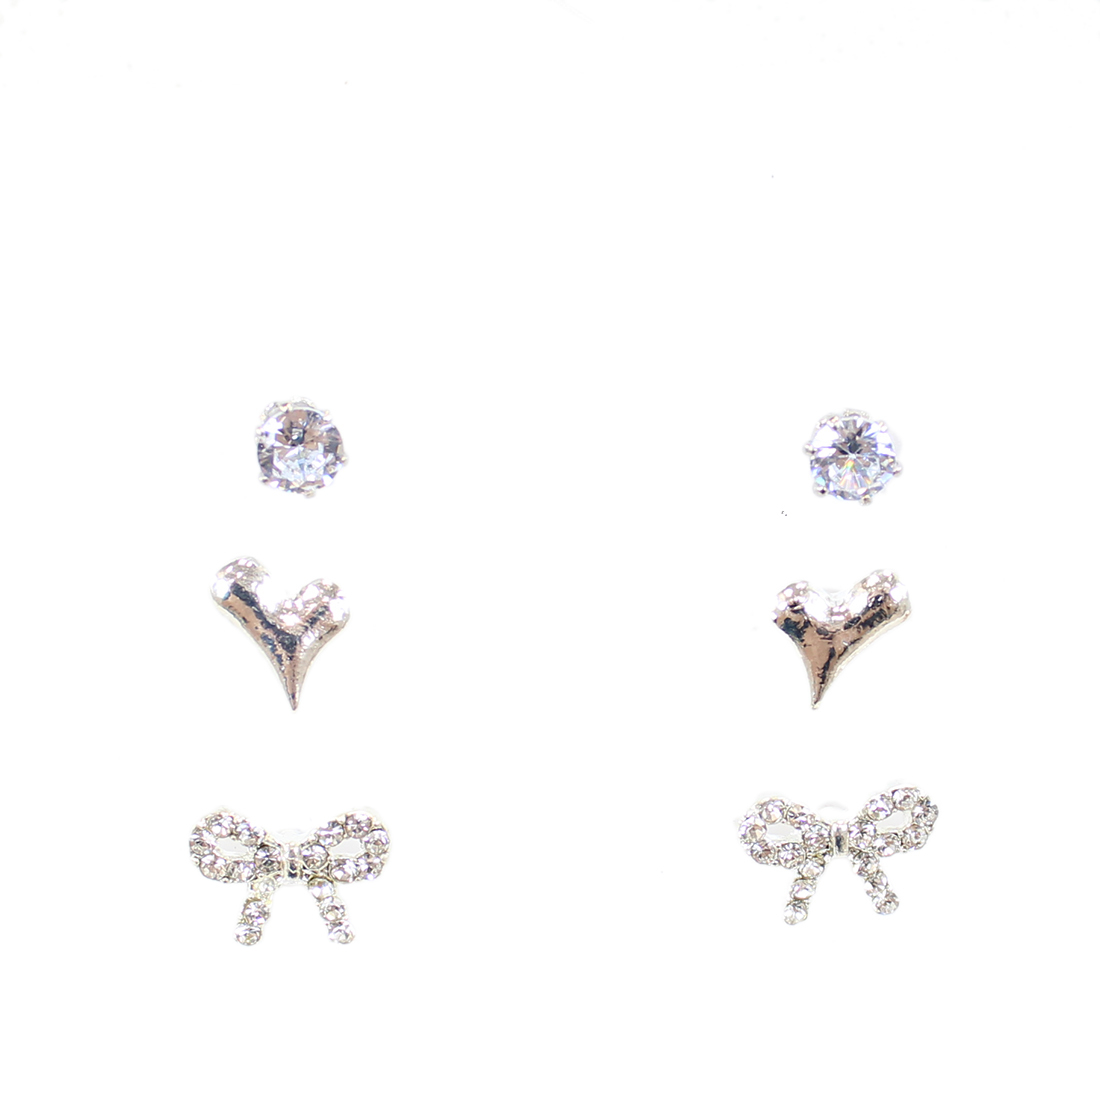 Three earrings bow, heart & diamond